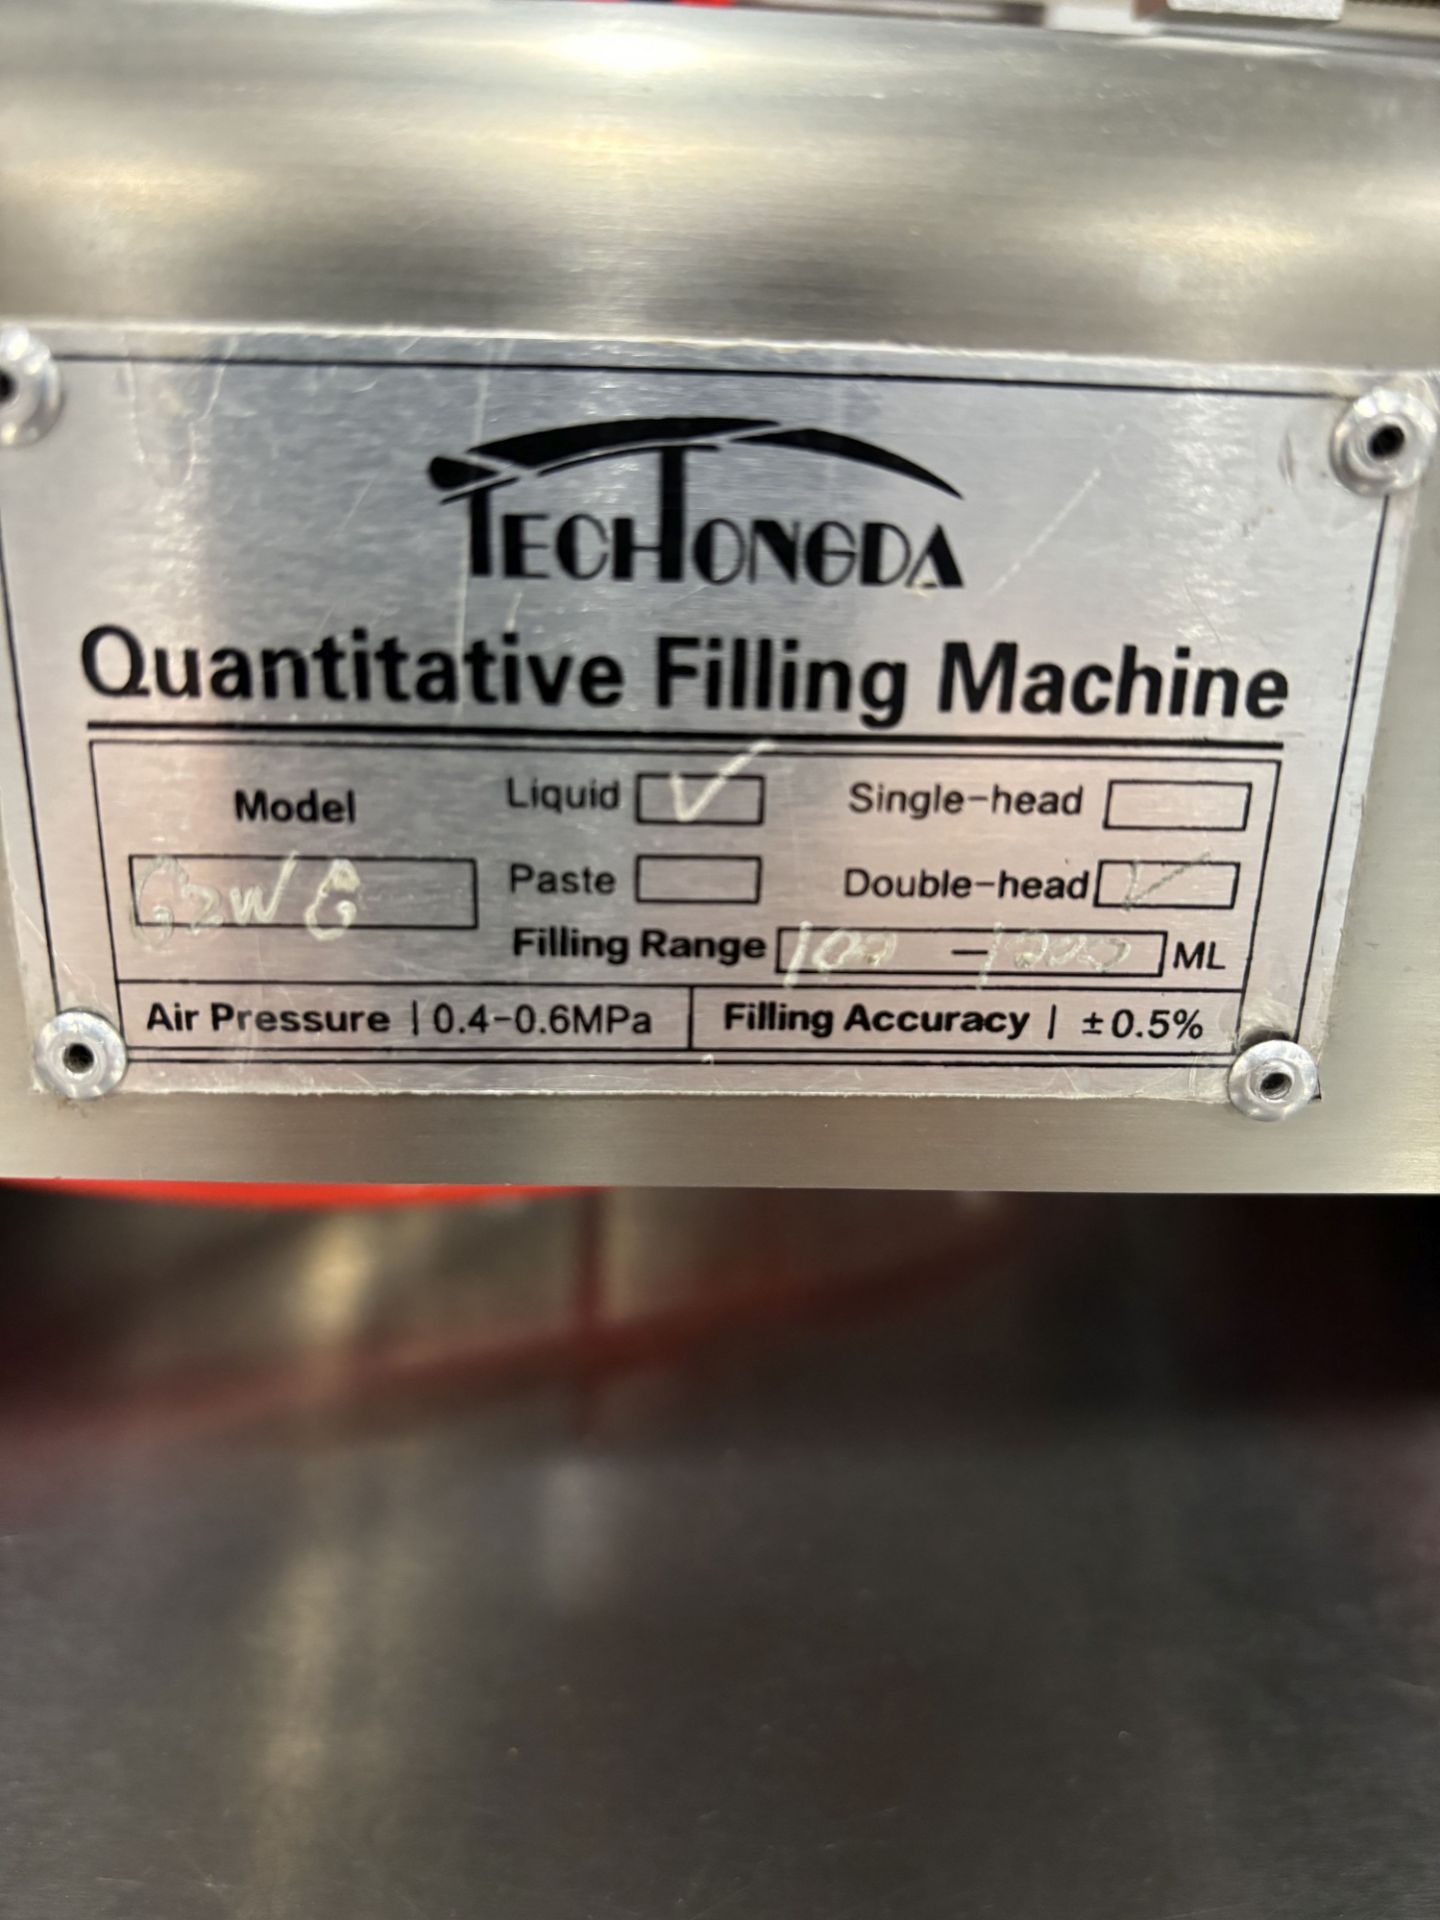 Unused TechTongda Dual Head Liquid Filling Machine filling range 100-1000ML - Image 5 of 6